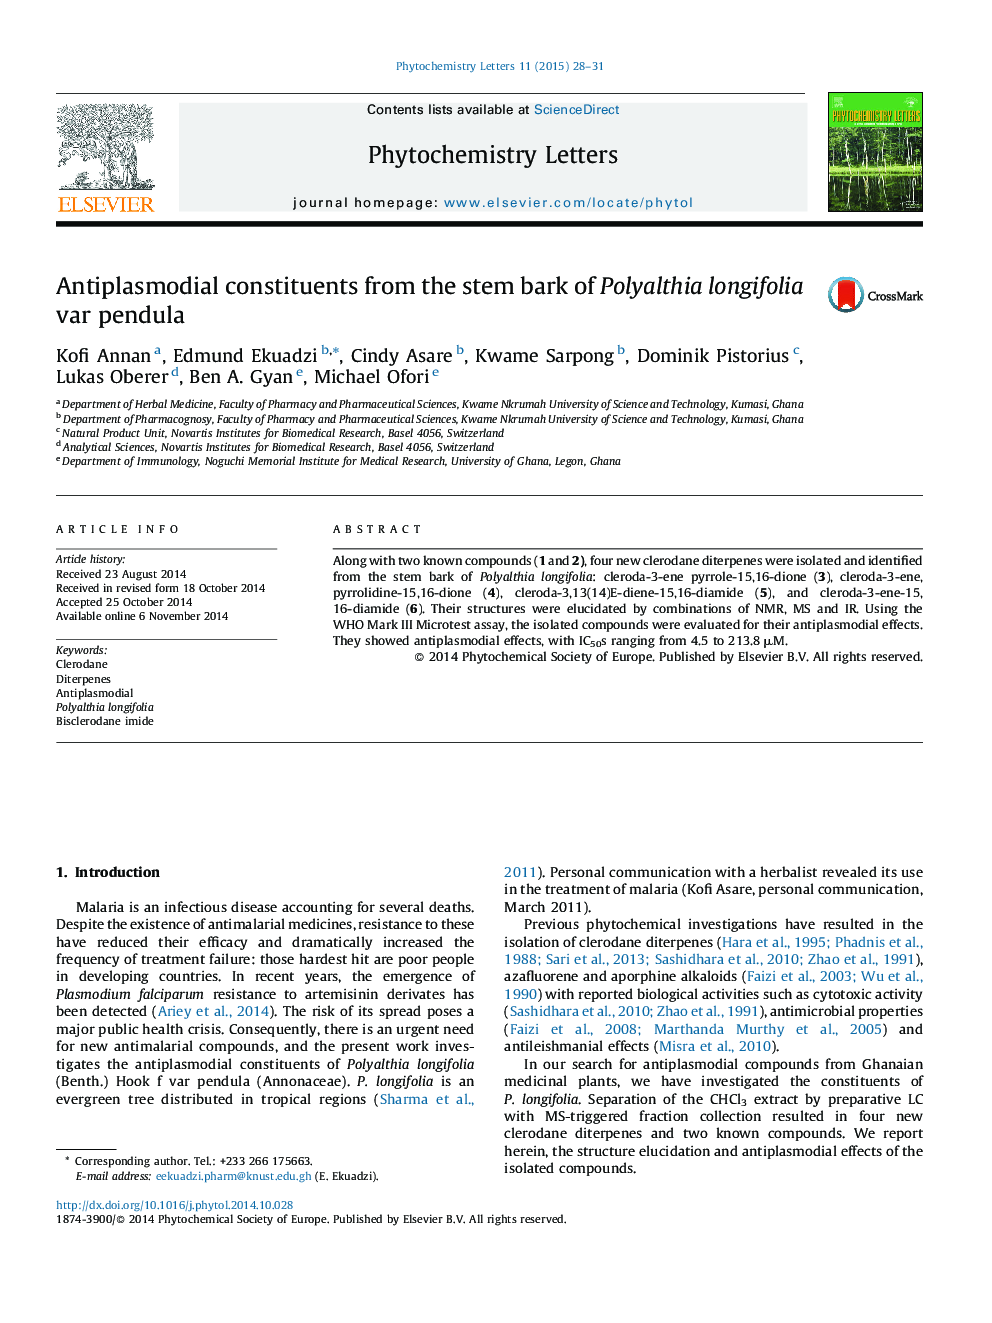 Antiplasmodial constituents from the stem bark of Polyalthia longifolia var pendula